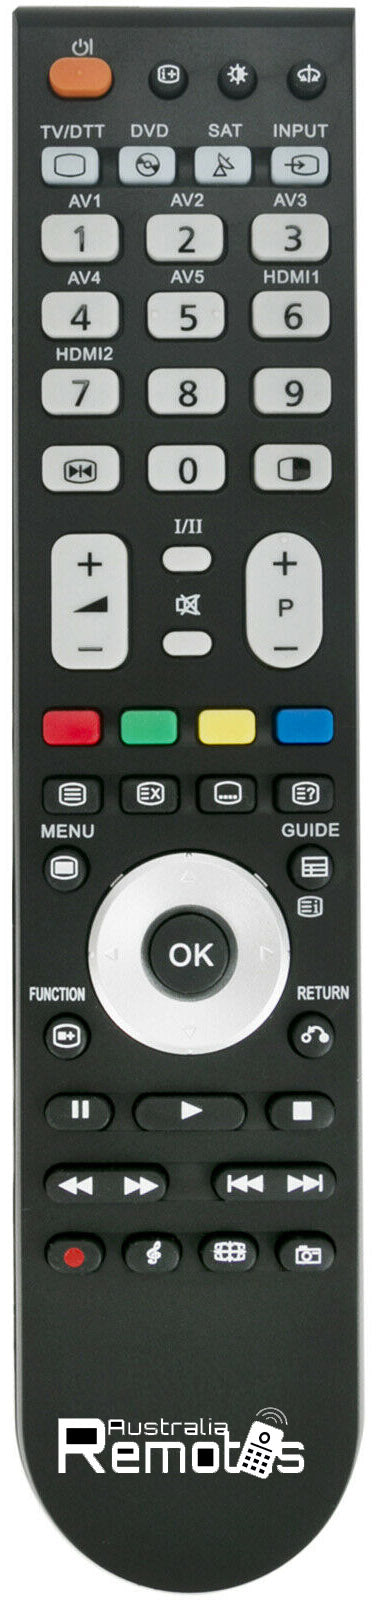 Replacement TV Remote for Hitachi Remotes